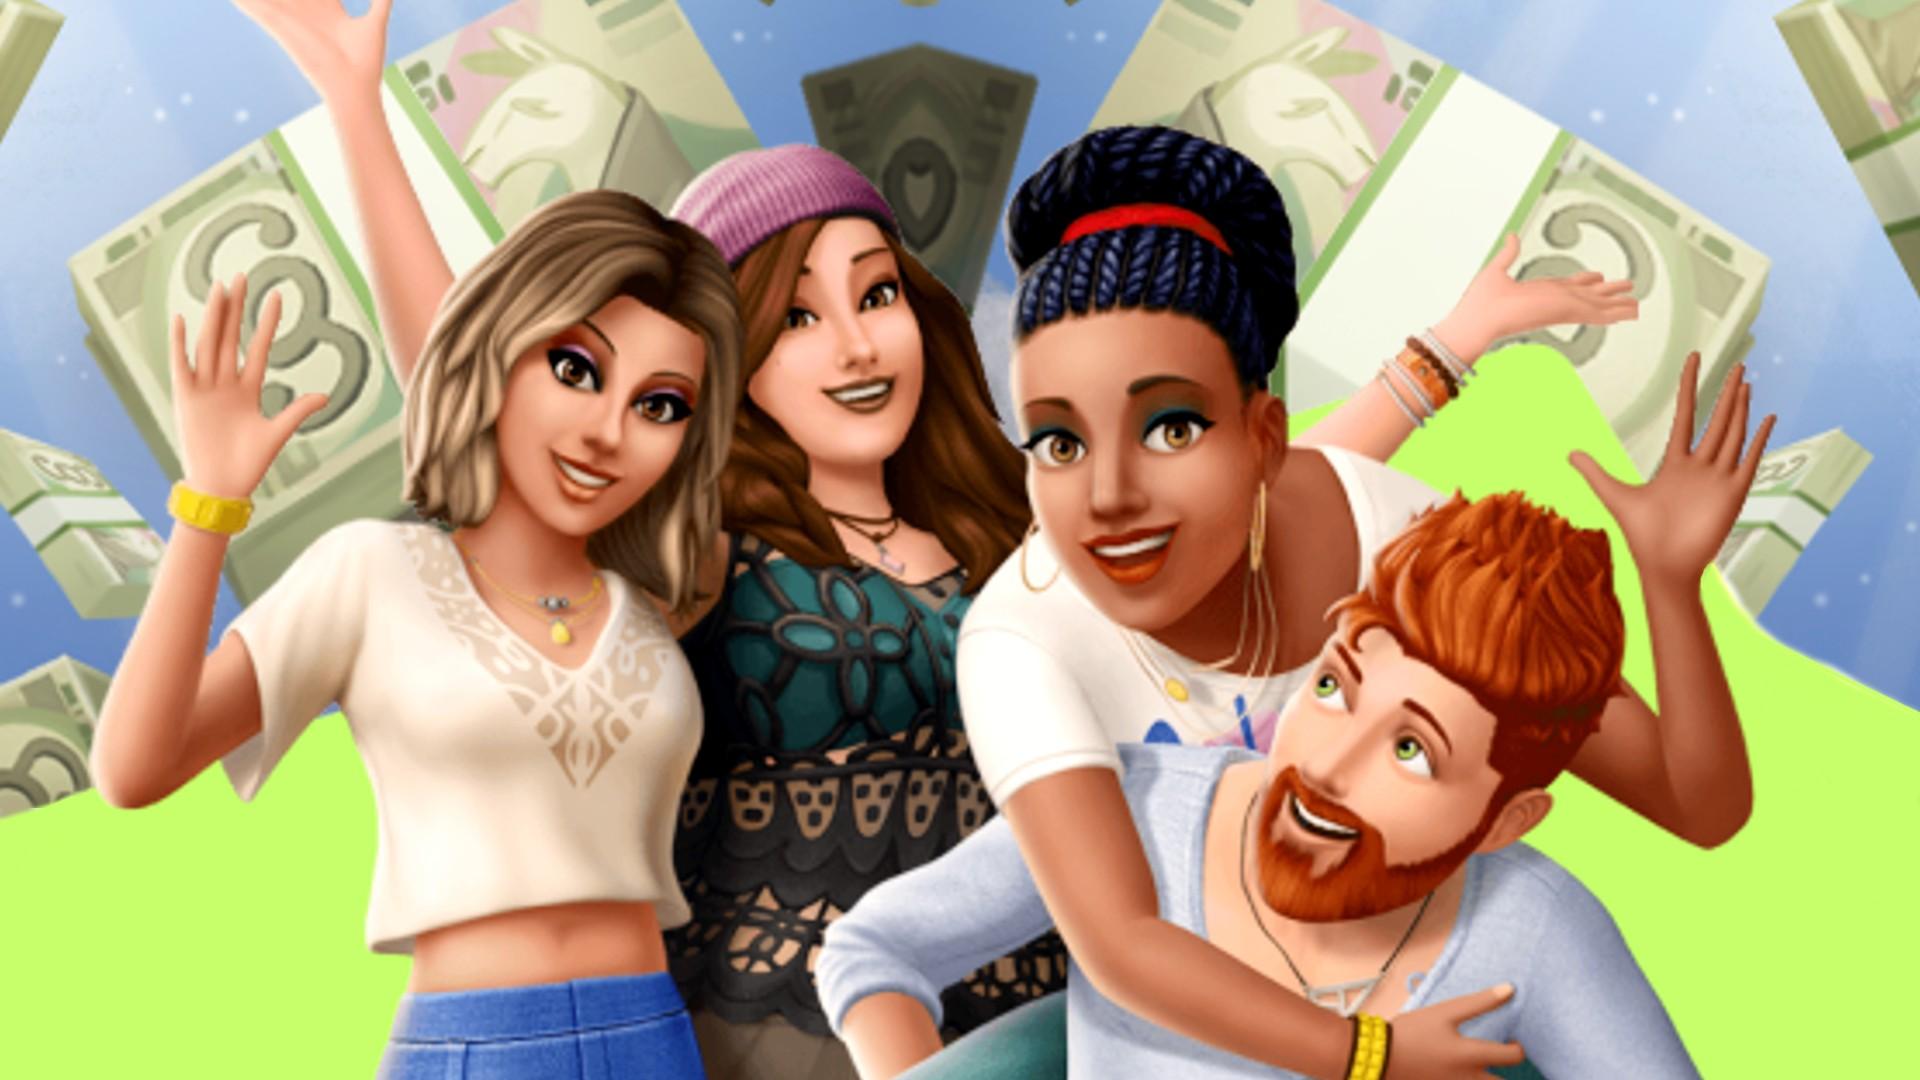 Sims 3 Guide - Cheat Codes  Sims cheats, Sims 4 cheats, Sims